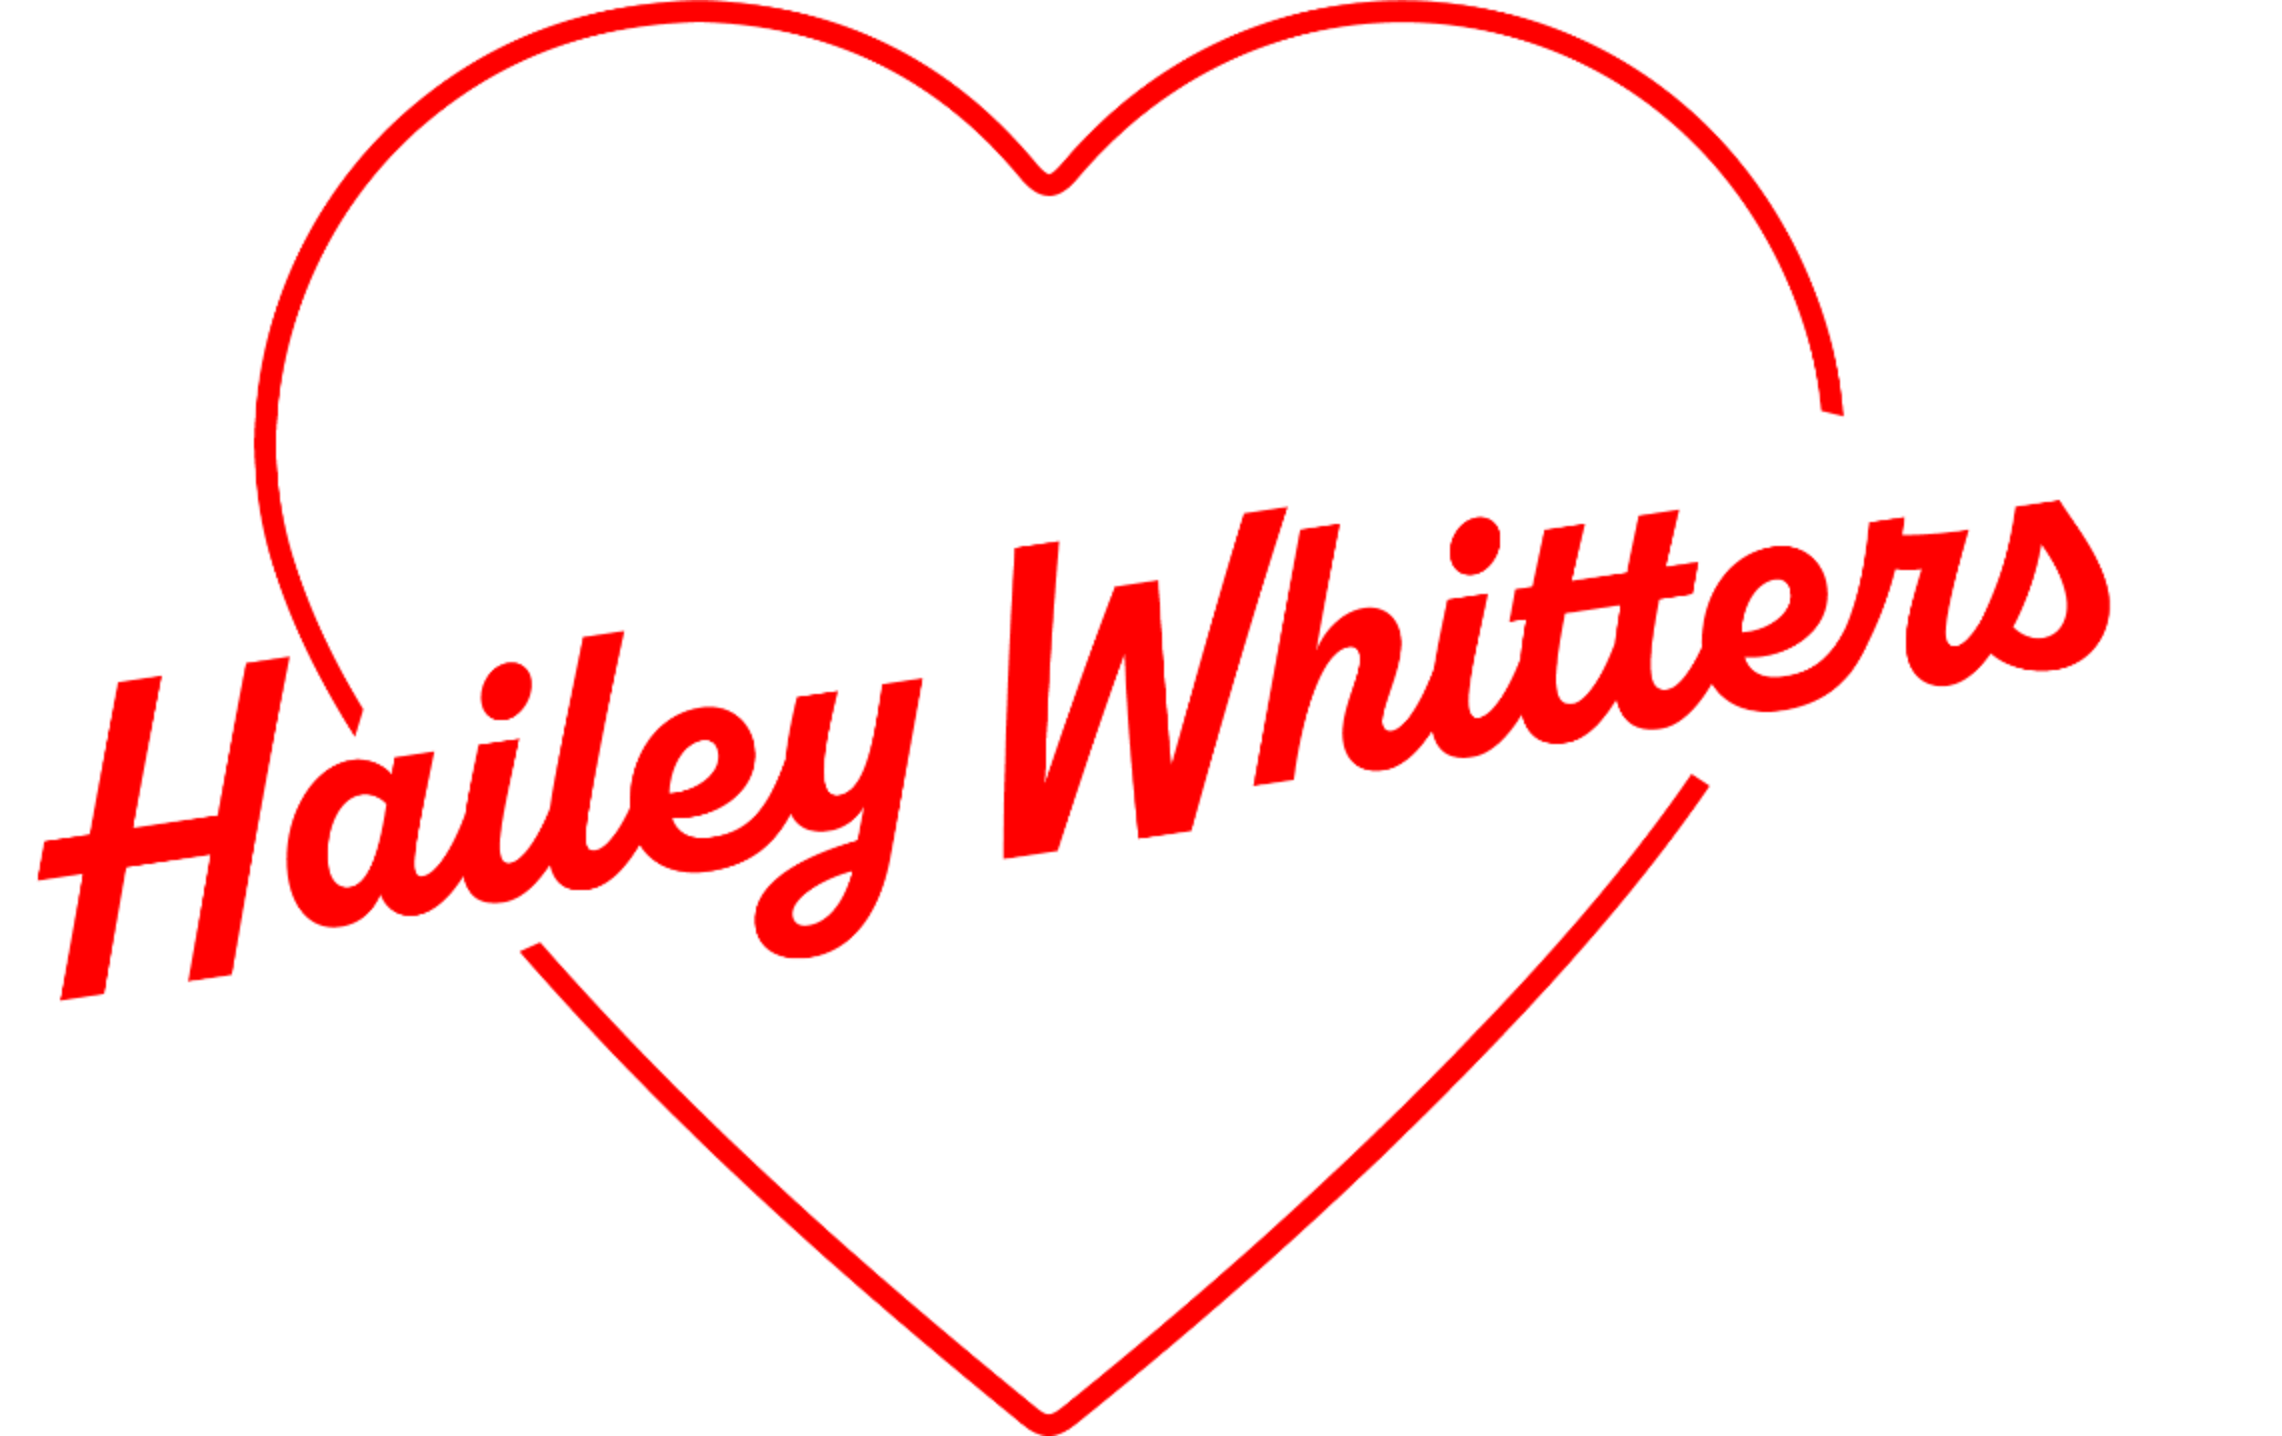 Hailey Whitters Logo